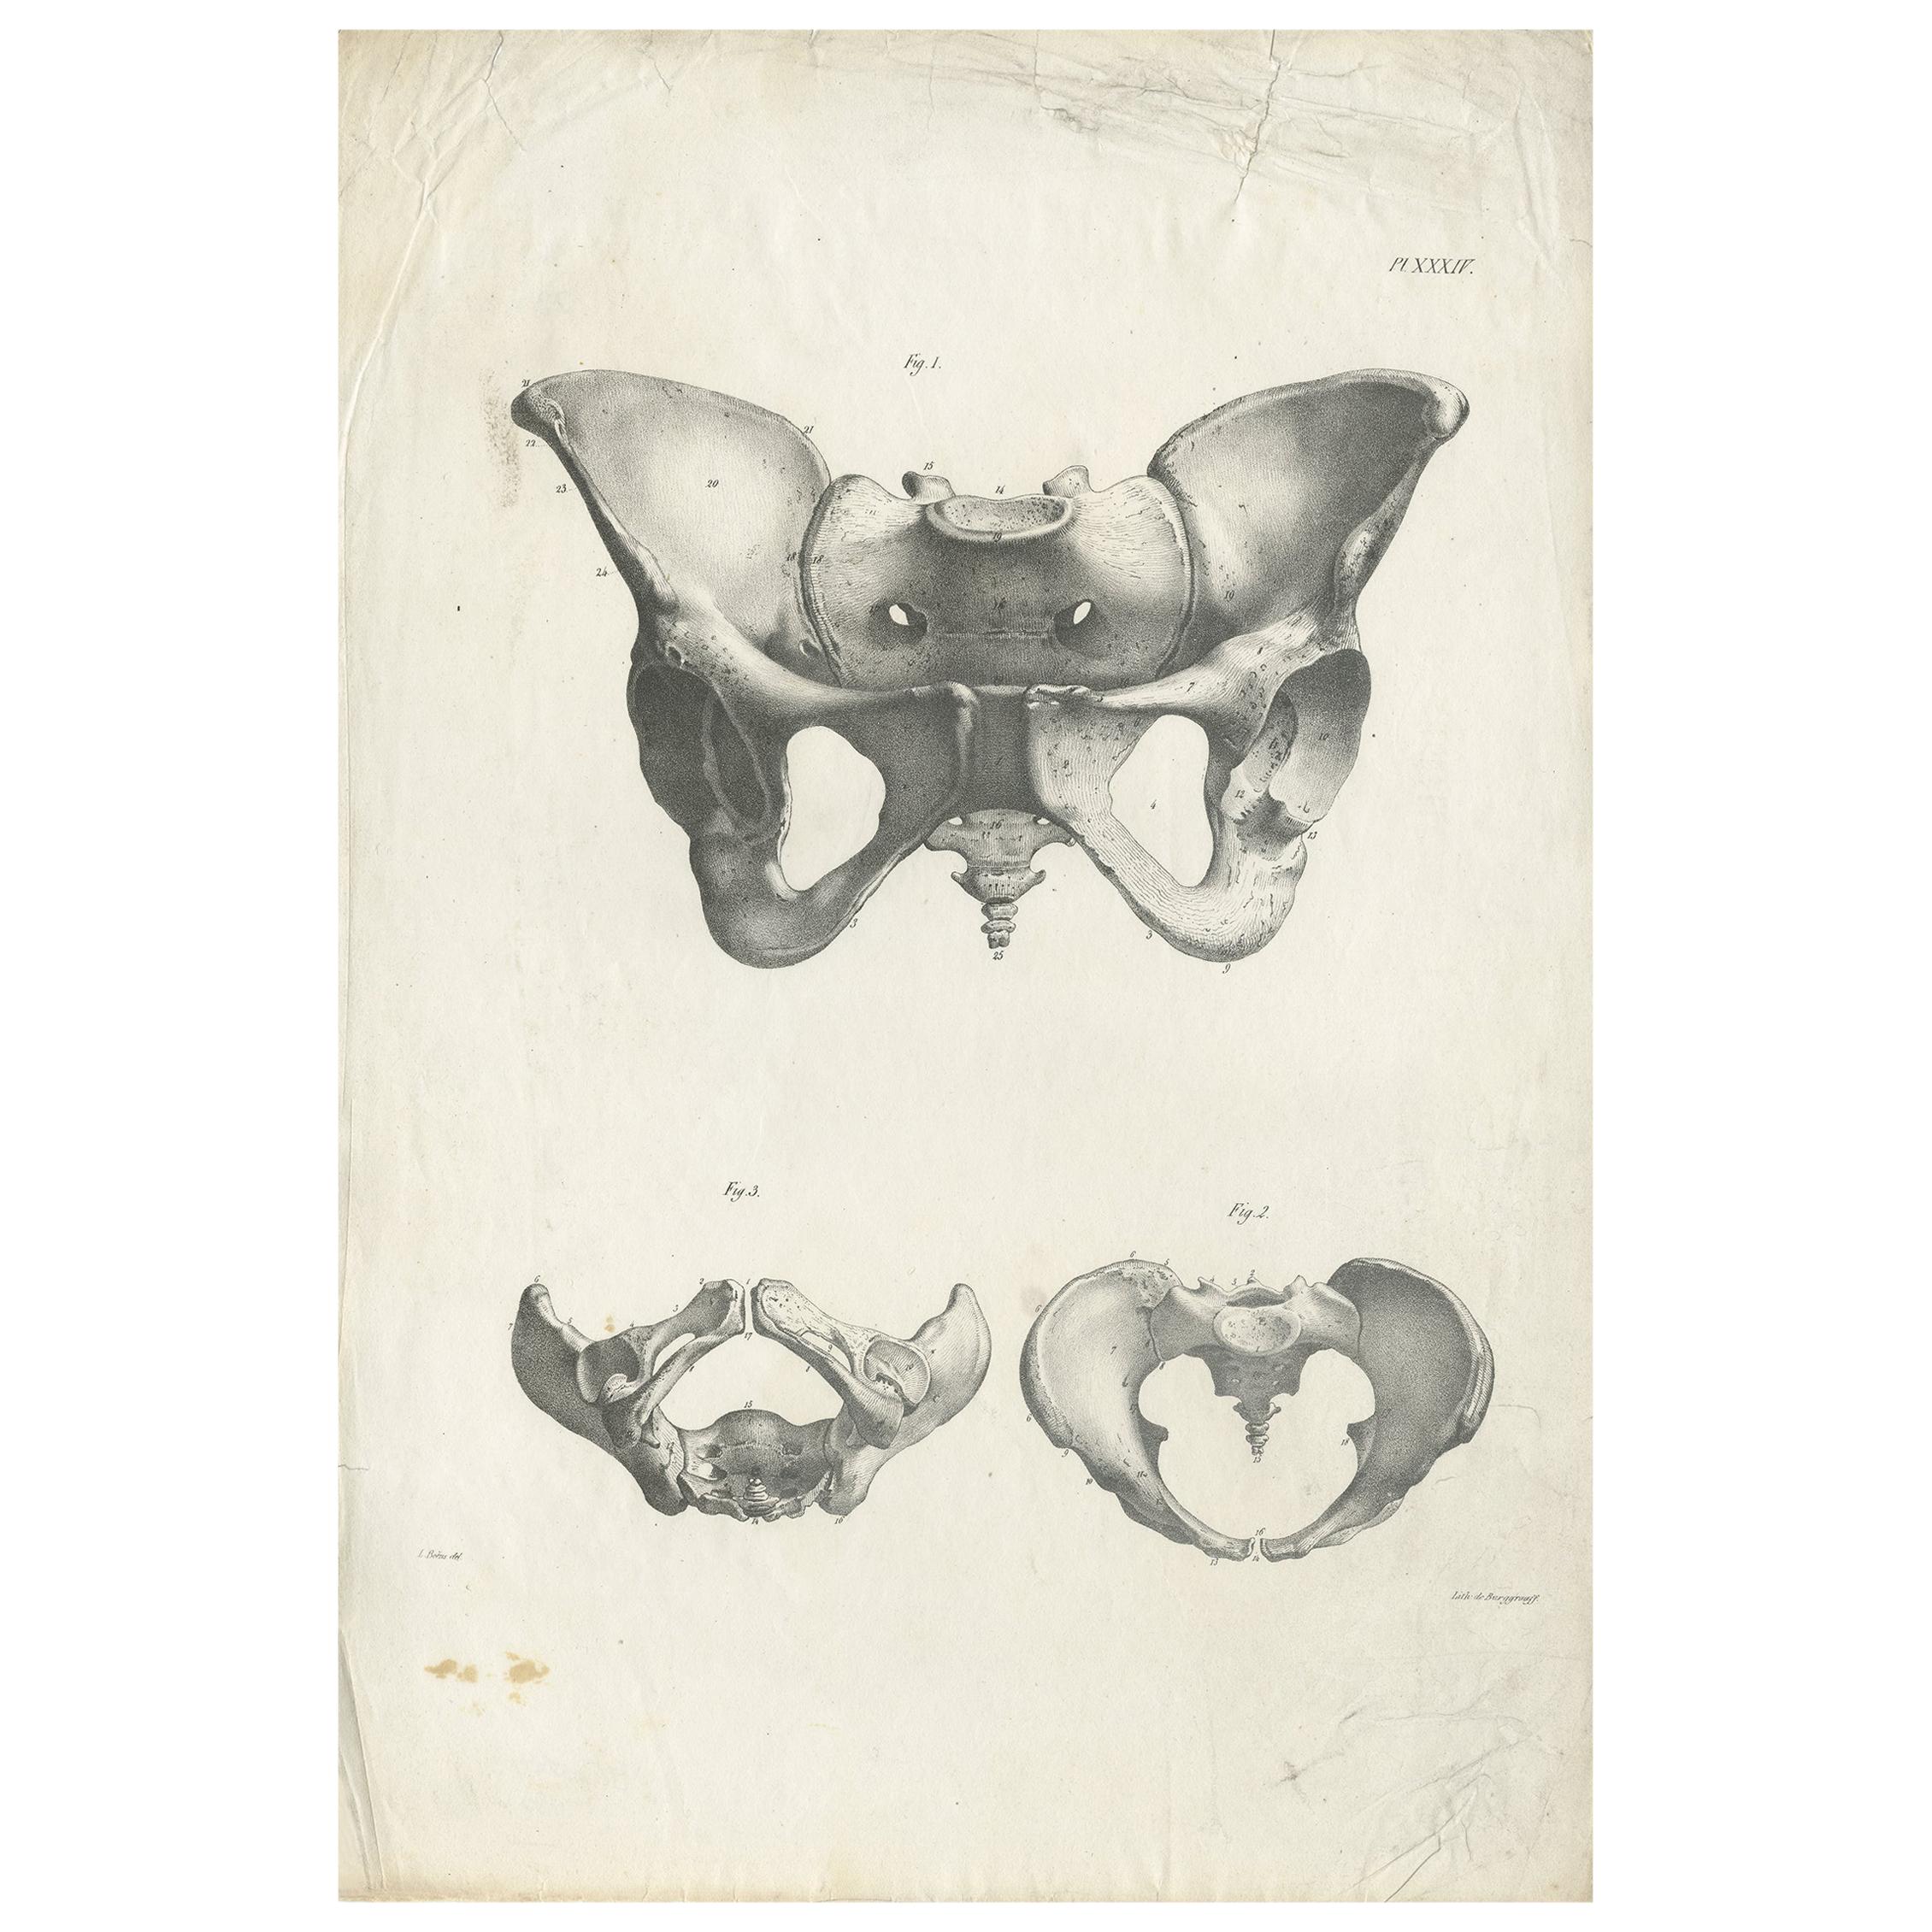 Pl. XXXIV Antique Anatomy / Medical Print of the Pelvis by Cloquet '1821' (anatomie ancienne / impression médicale du bassin)